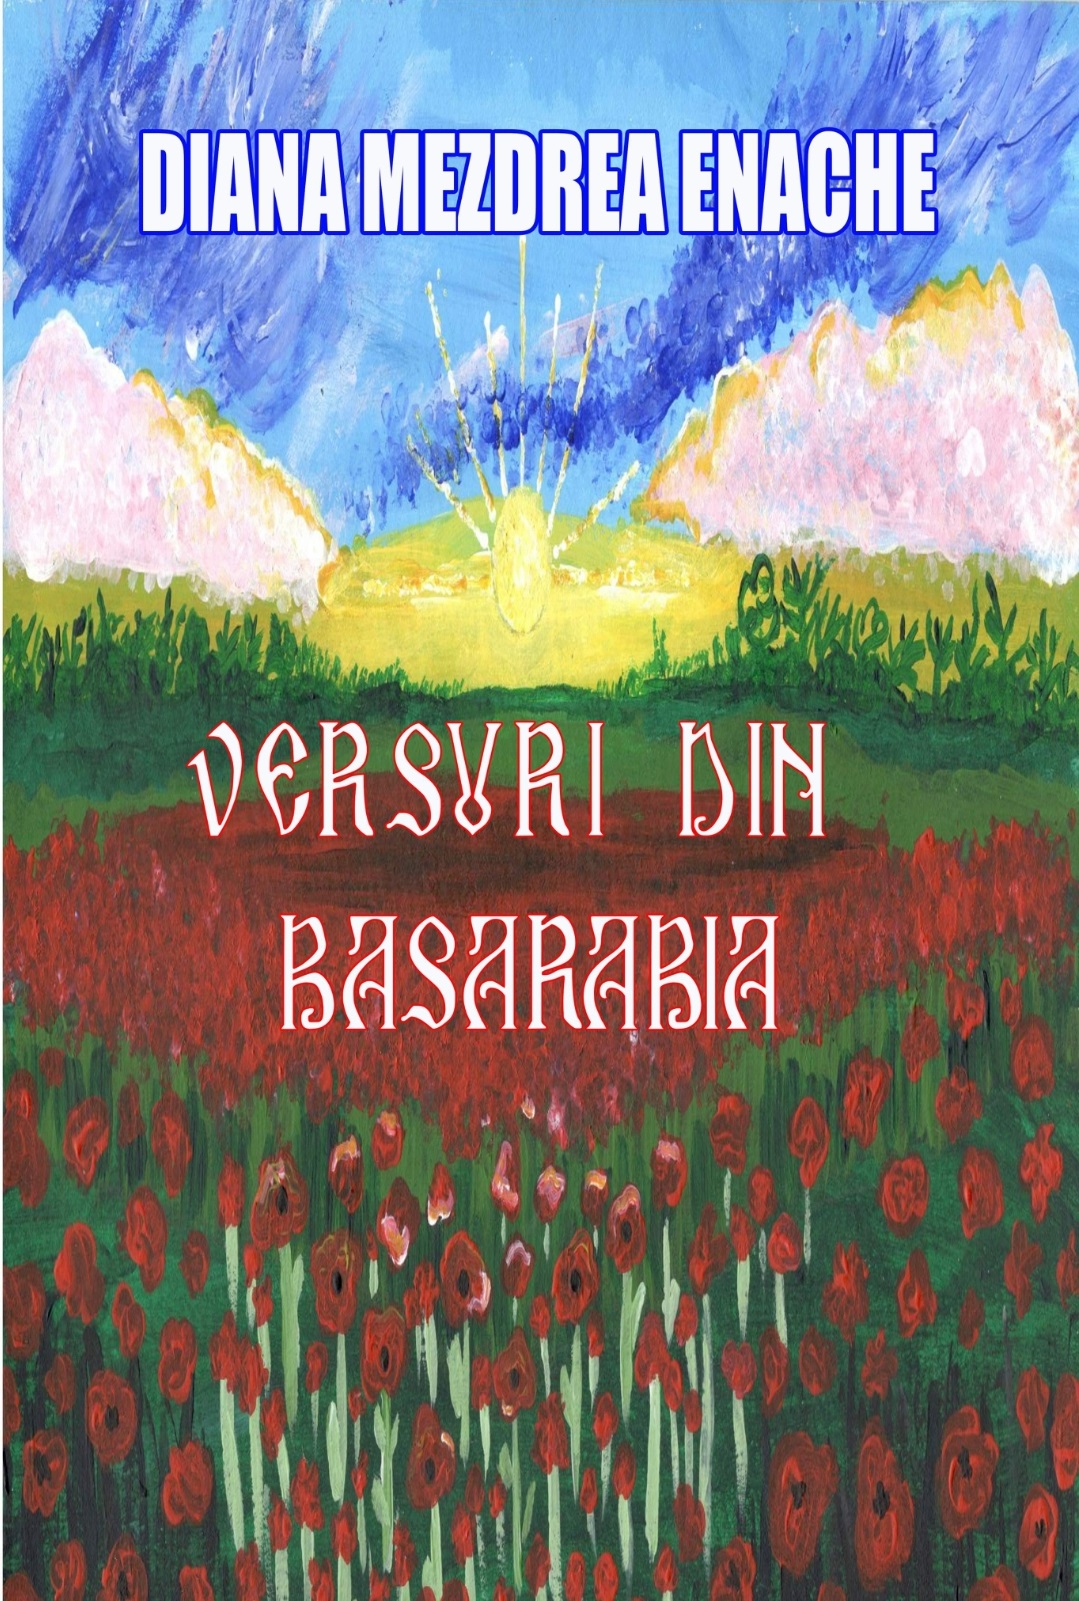 Versuri din Basarabia